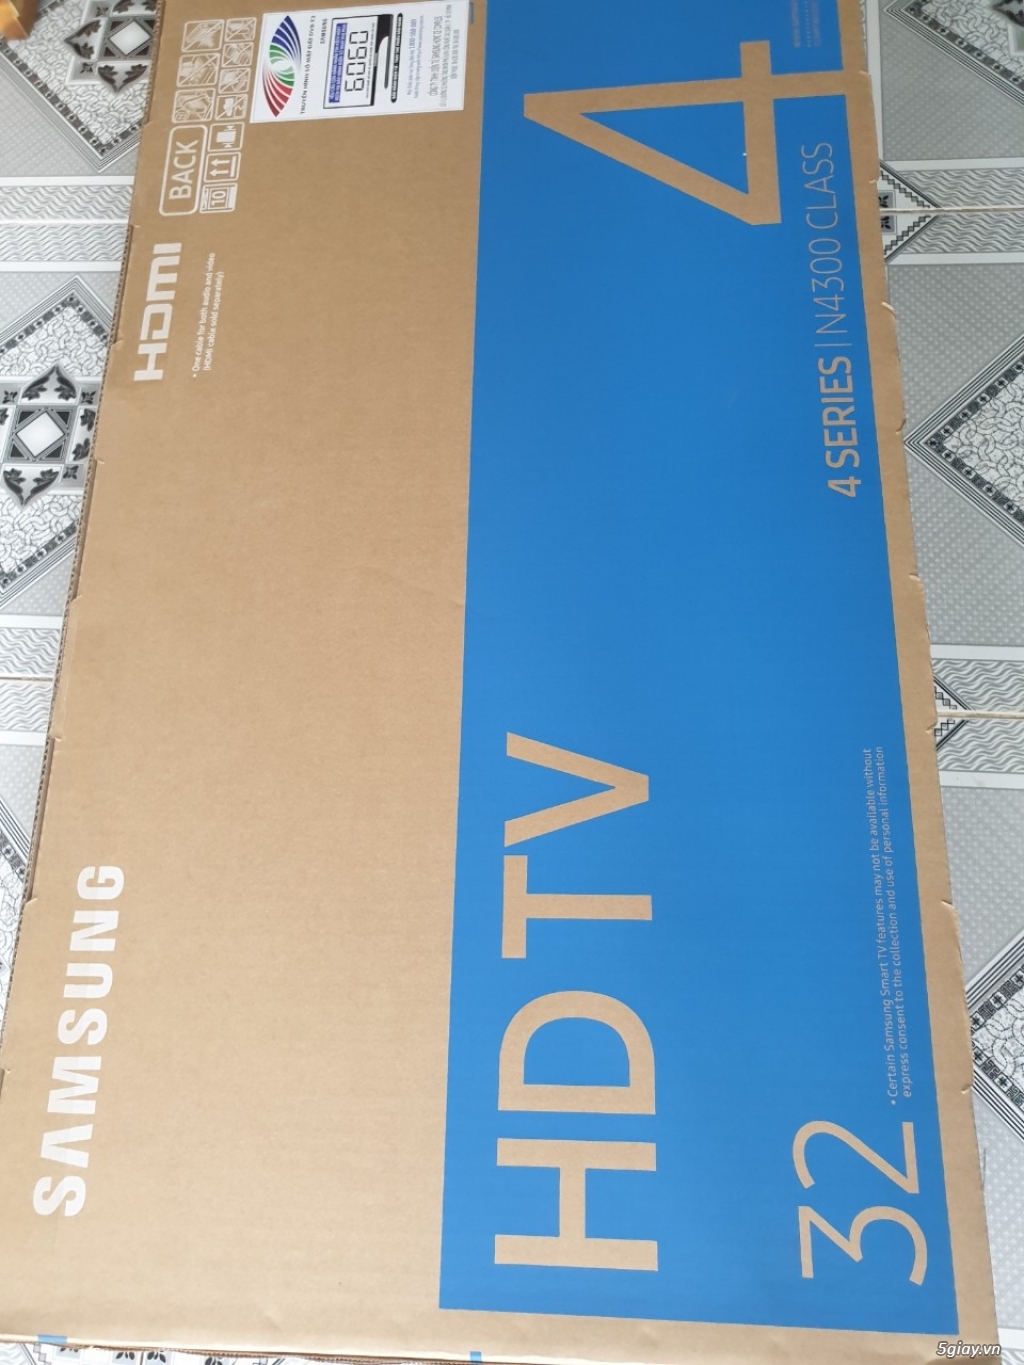 Bán Tivi Smart TV HD 32 inch N4300 mới 100